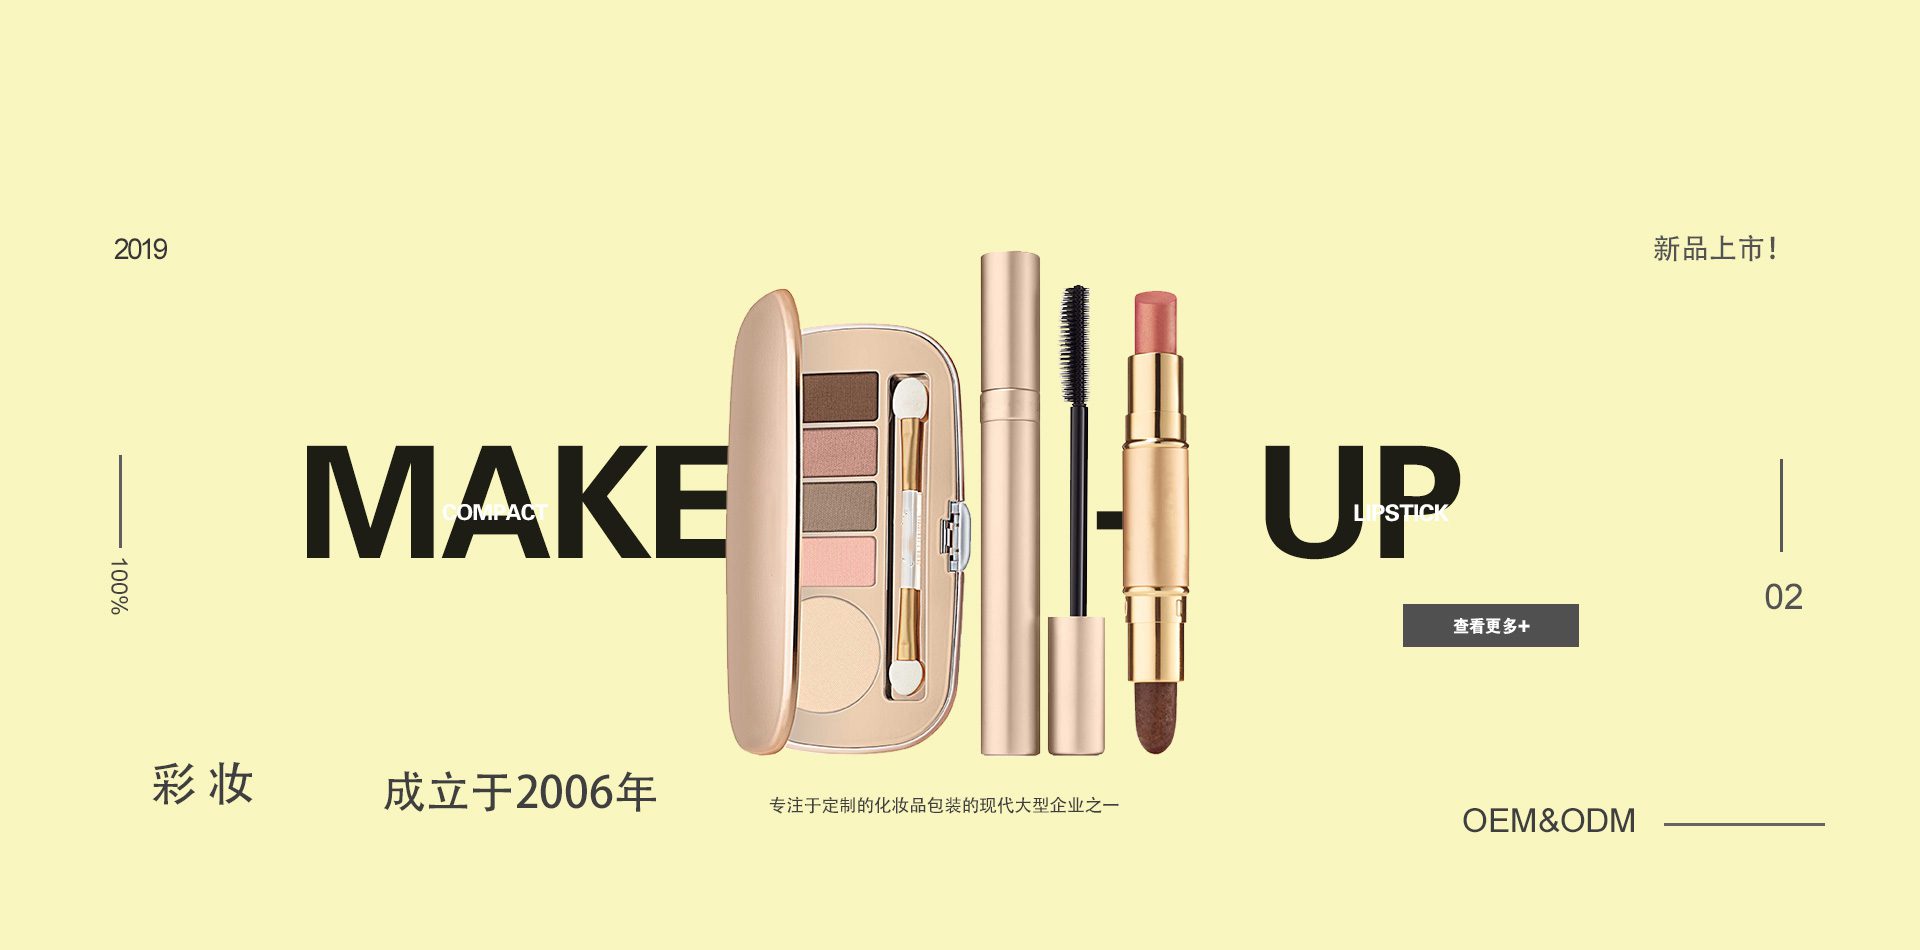 Make-up-banner灰色版-中文版